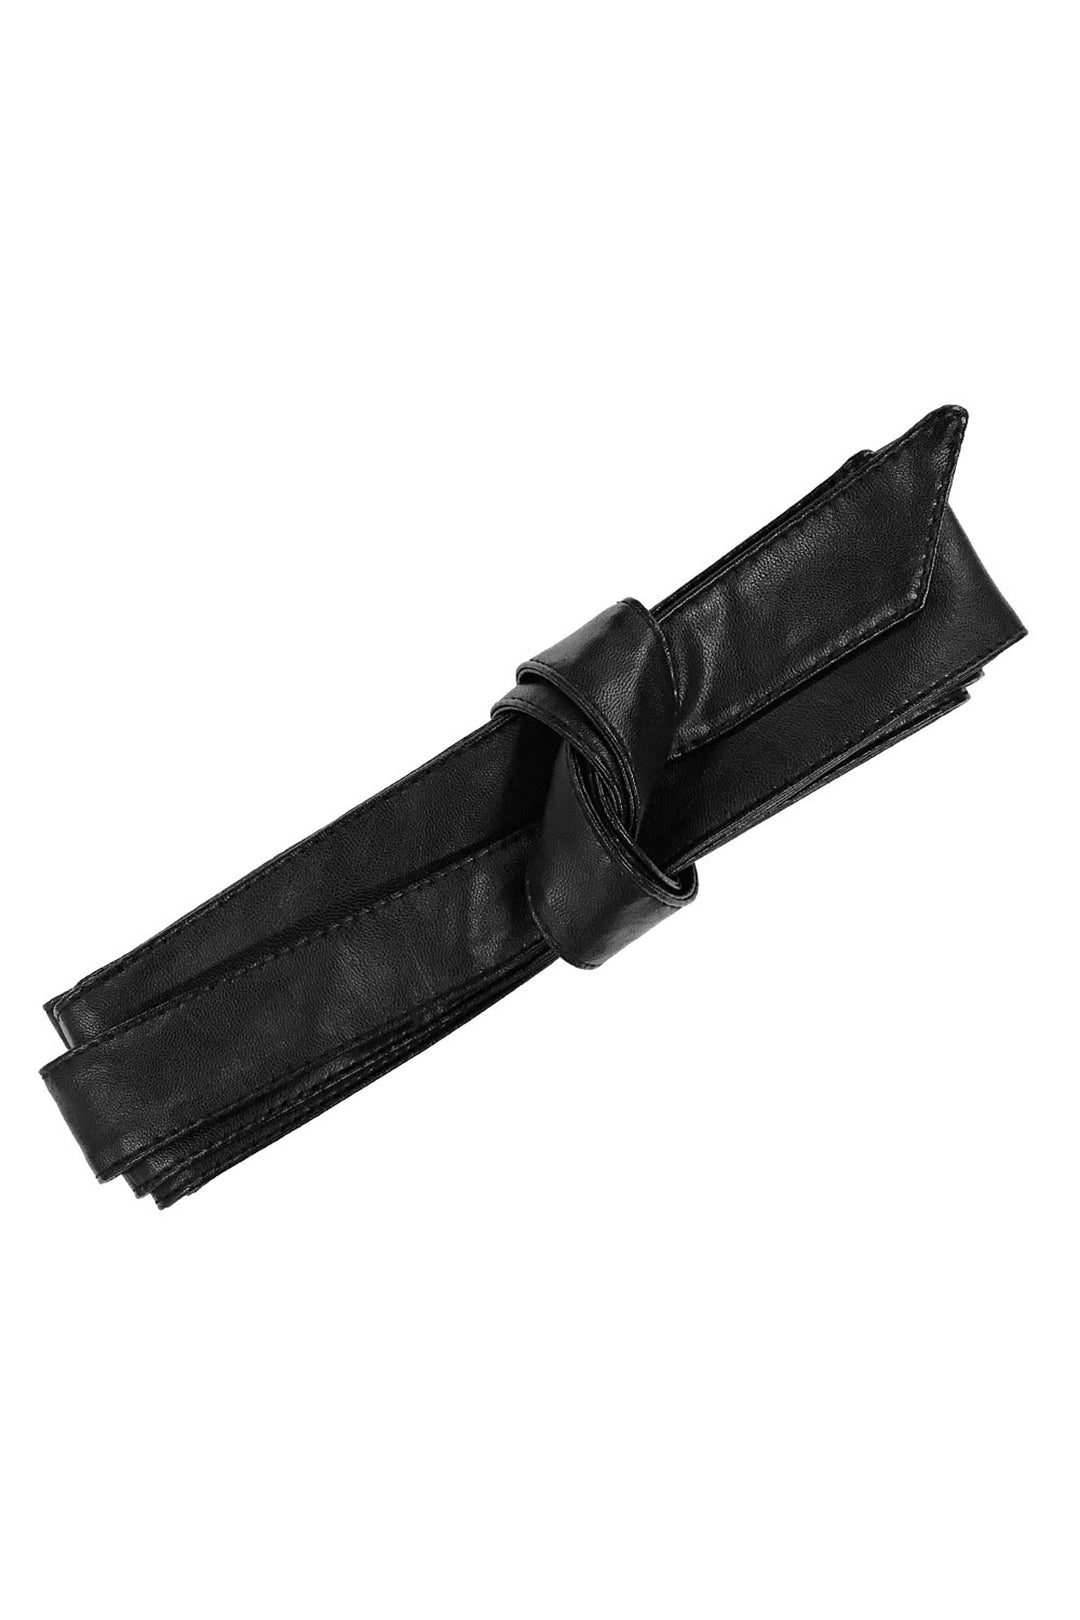 Real Leather Obi Belt, Sash Belt, Long Tie Belt, Double Wrap Belt